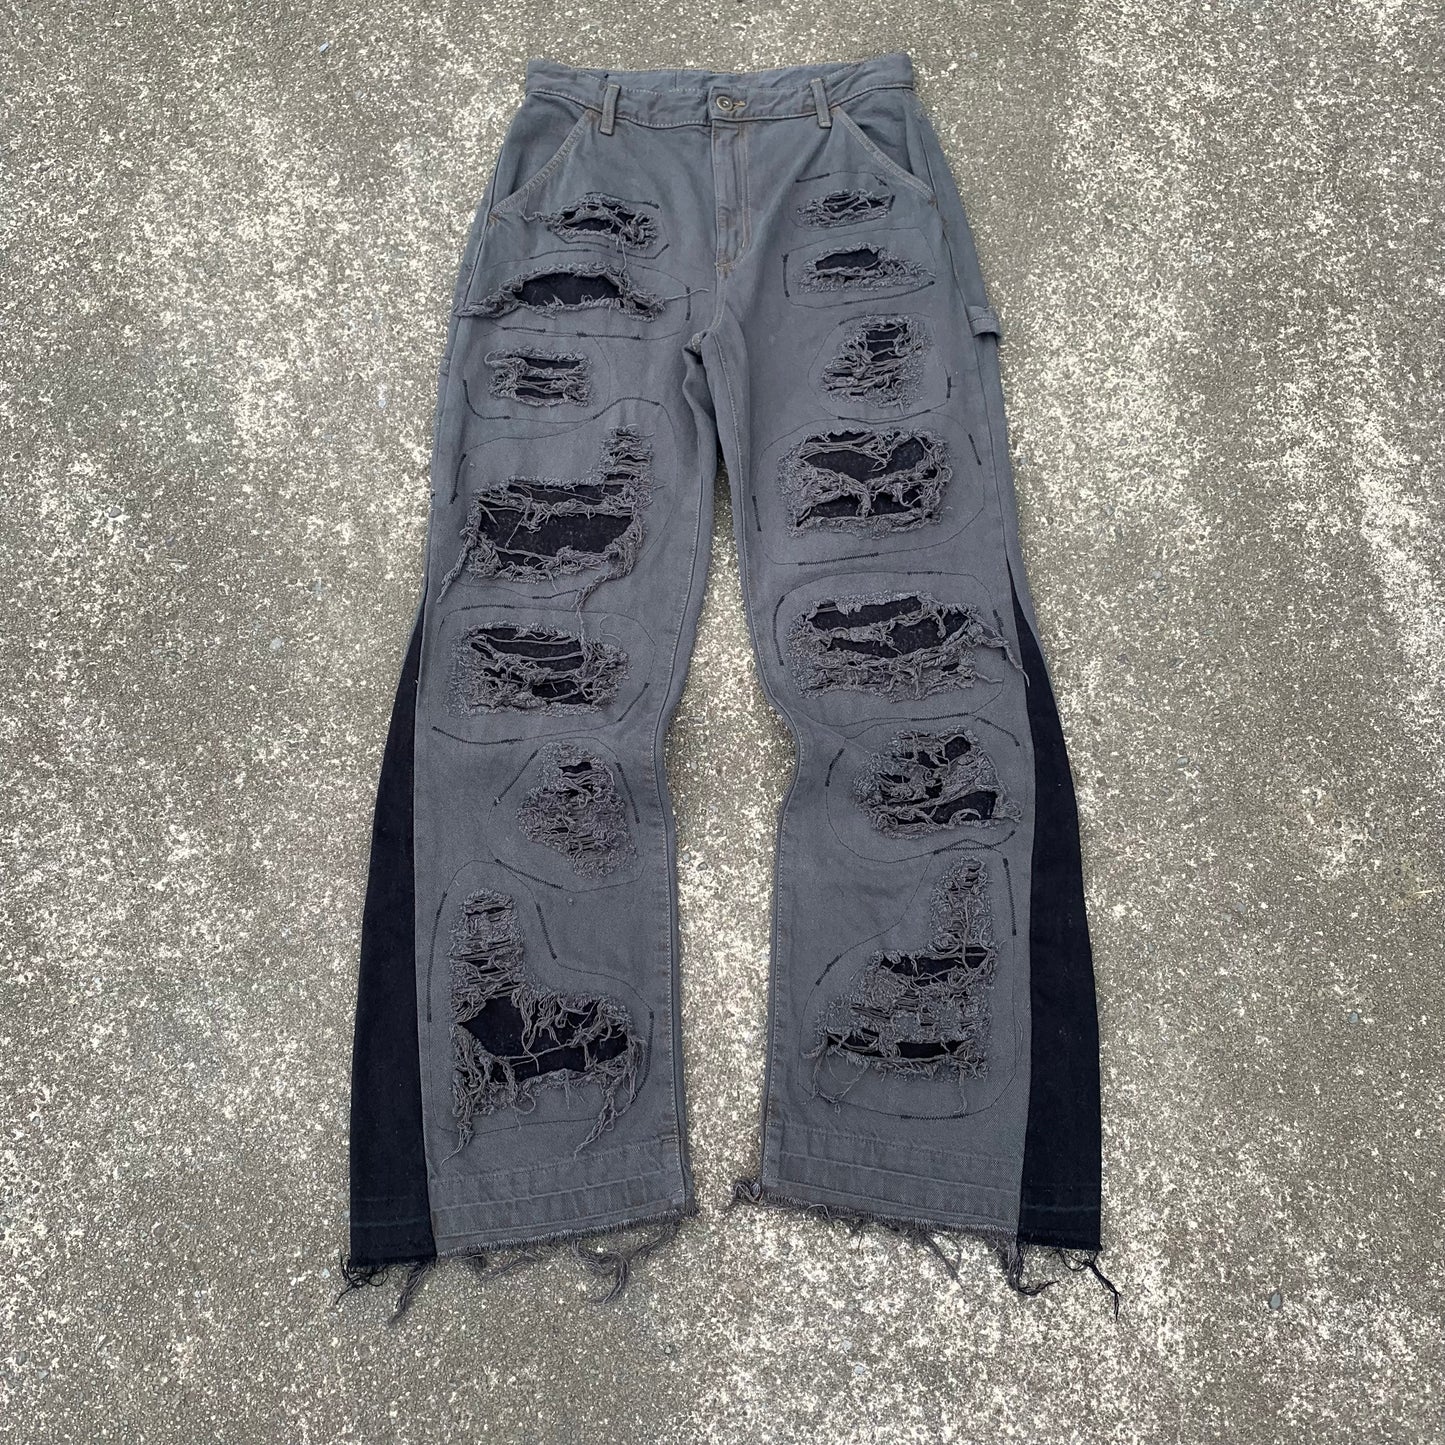 1/1 Diggy Carpenter Jeans - 32x32